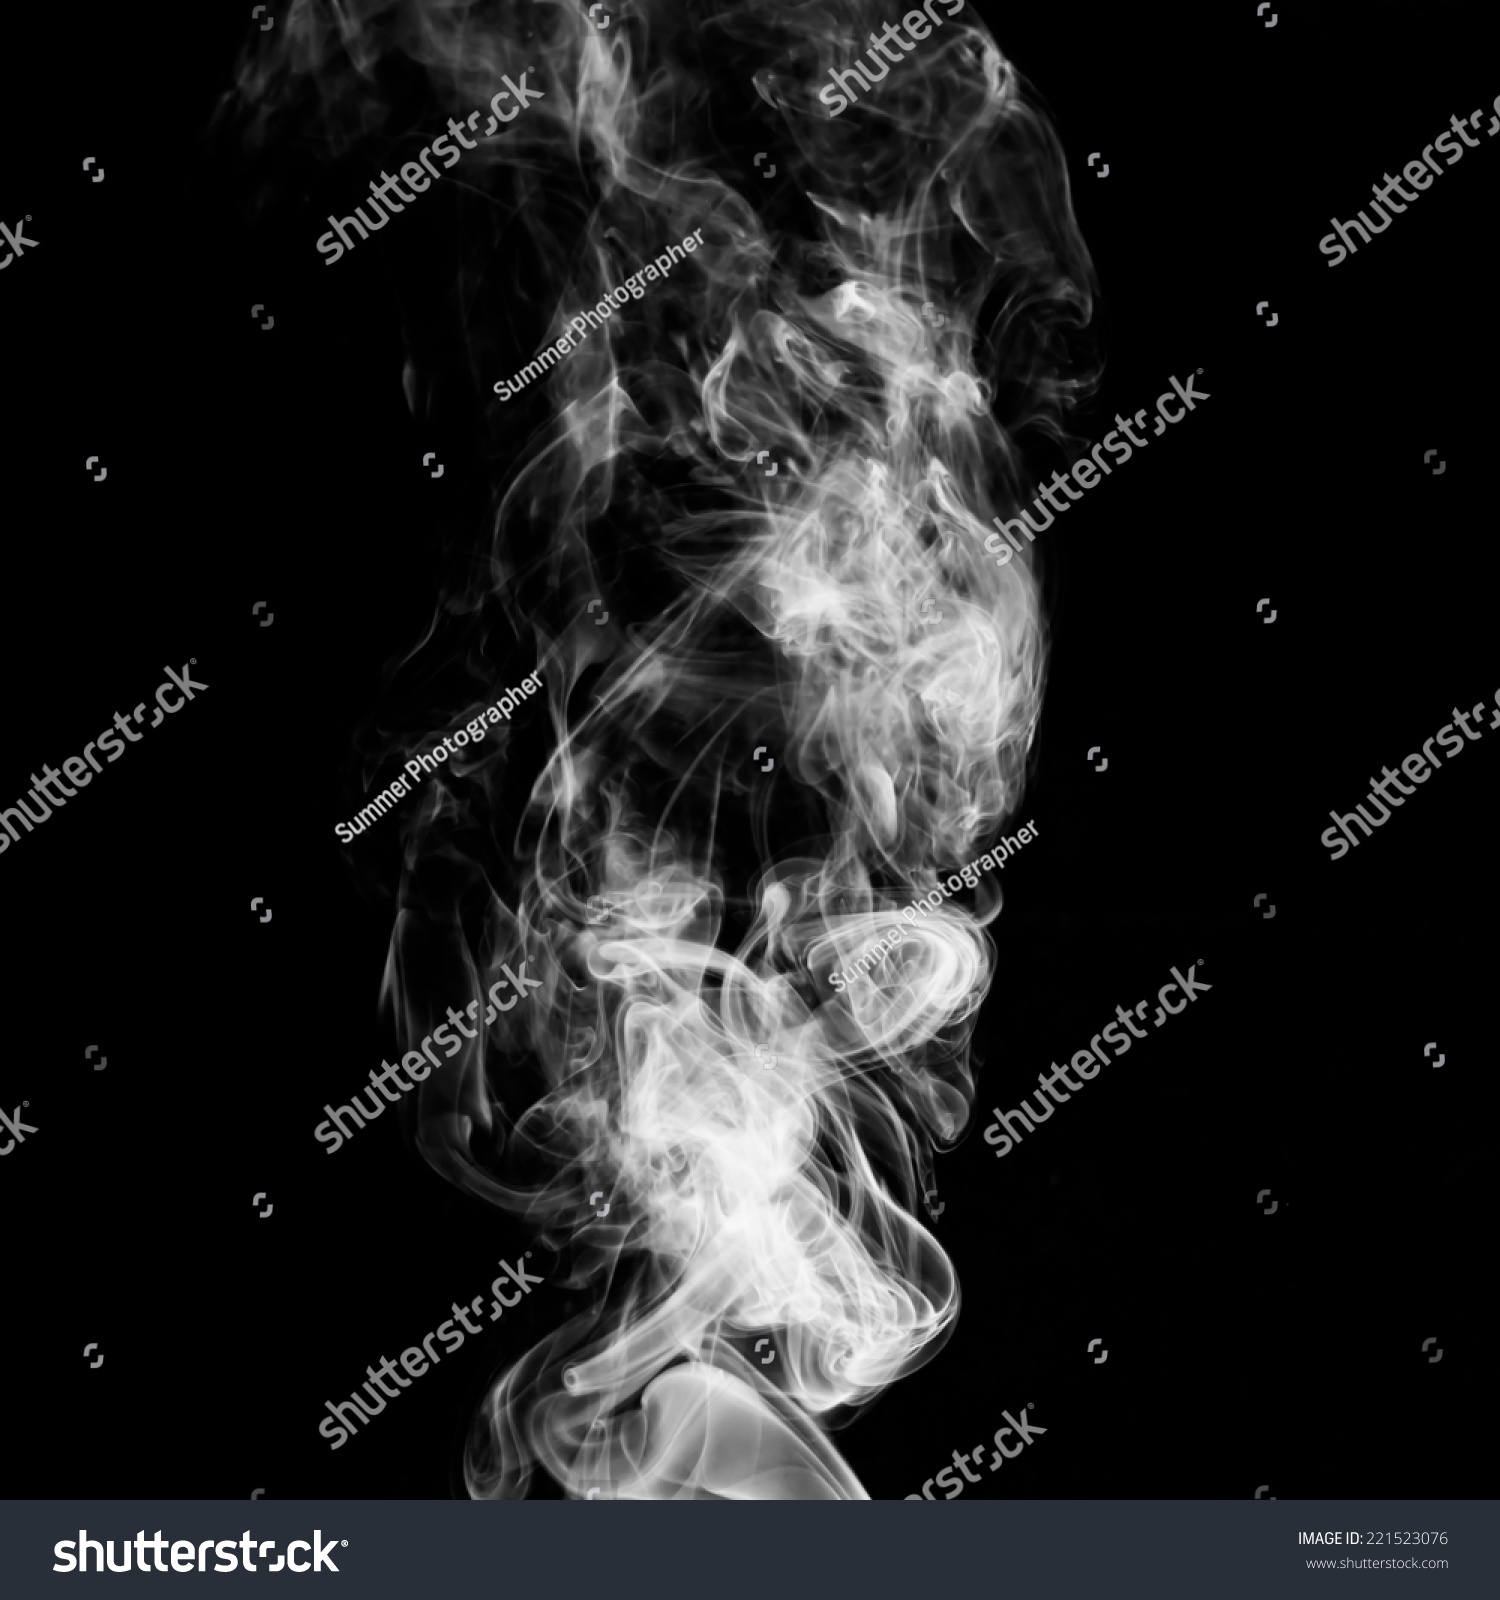 Smoke on black photo